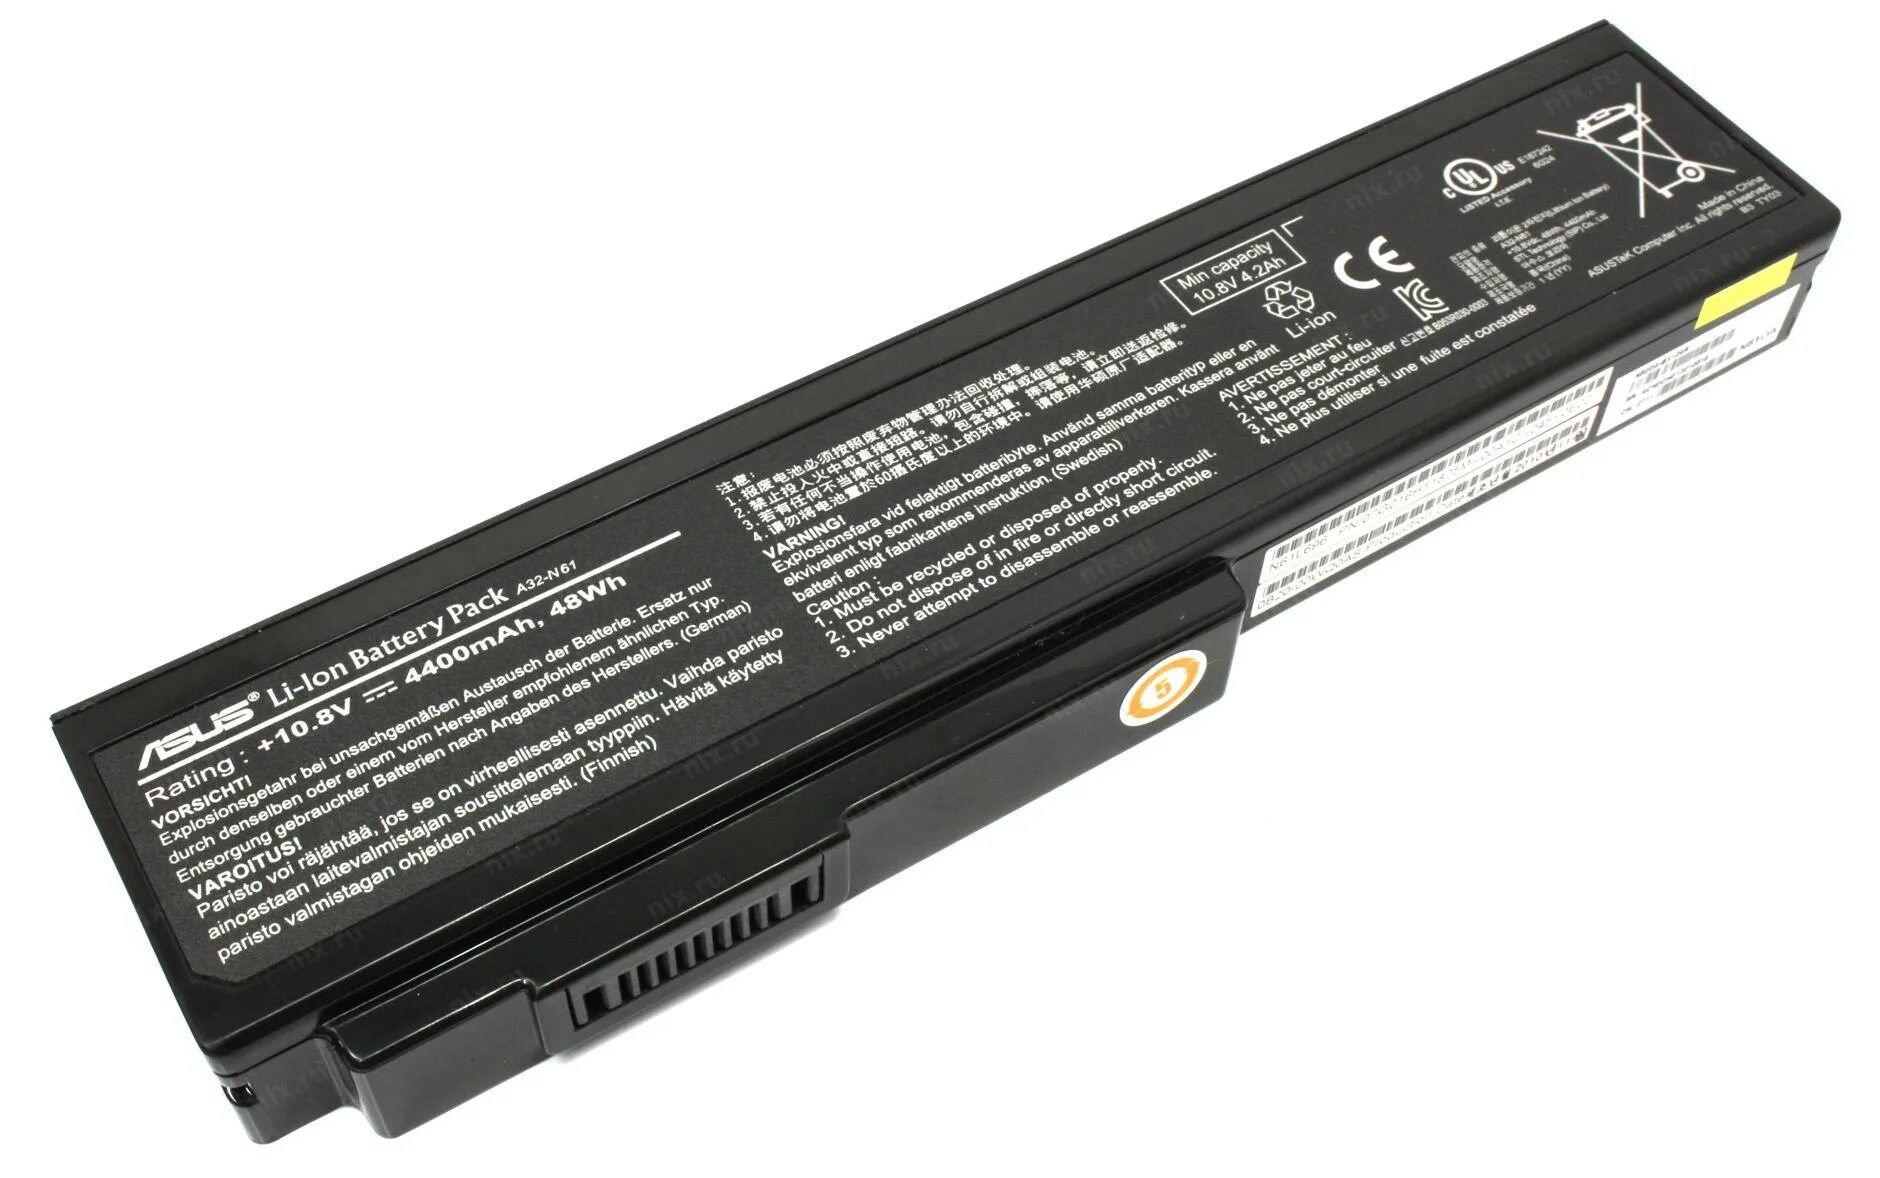 Battery s. ASUS n53s аккумулятор. Аккумулятор ASUS +10.8V 4400. T440s аккумулятор оригинал 4400mah. Ячейка: n-61 аккумулятор.